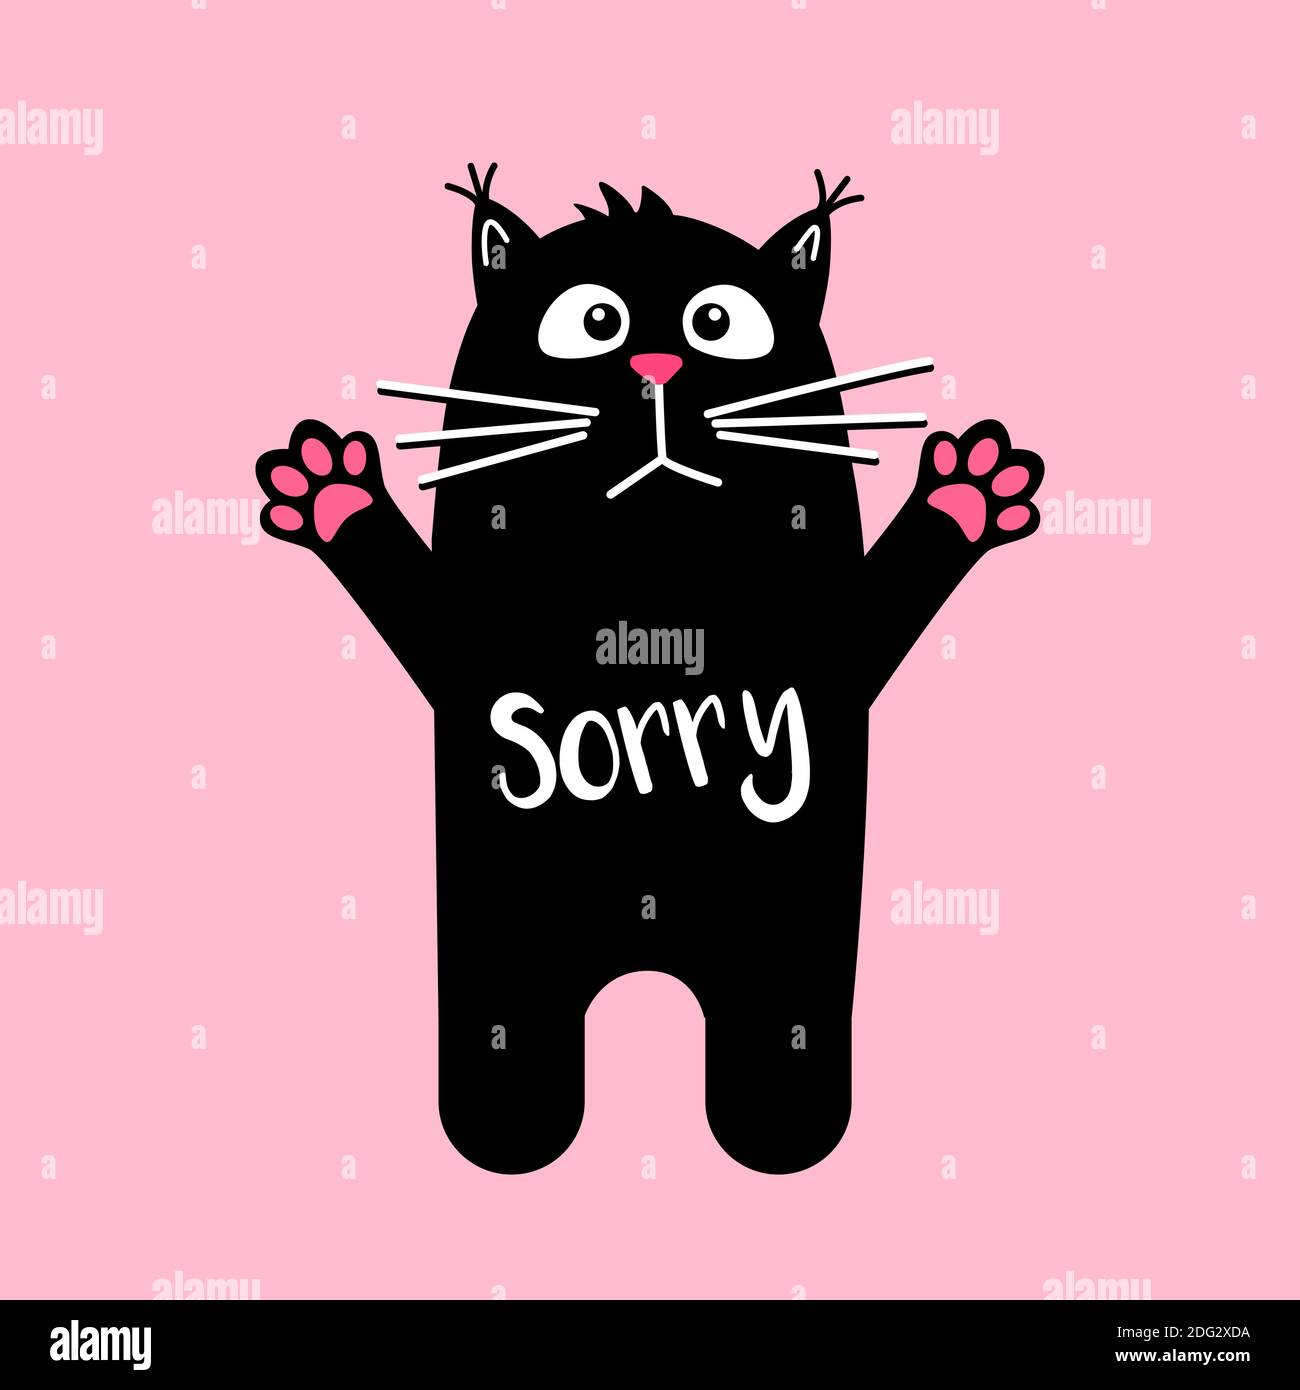 Simple cartoon black cat stock illustration. Illustration of blank -  137595320